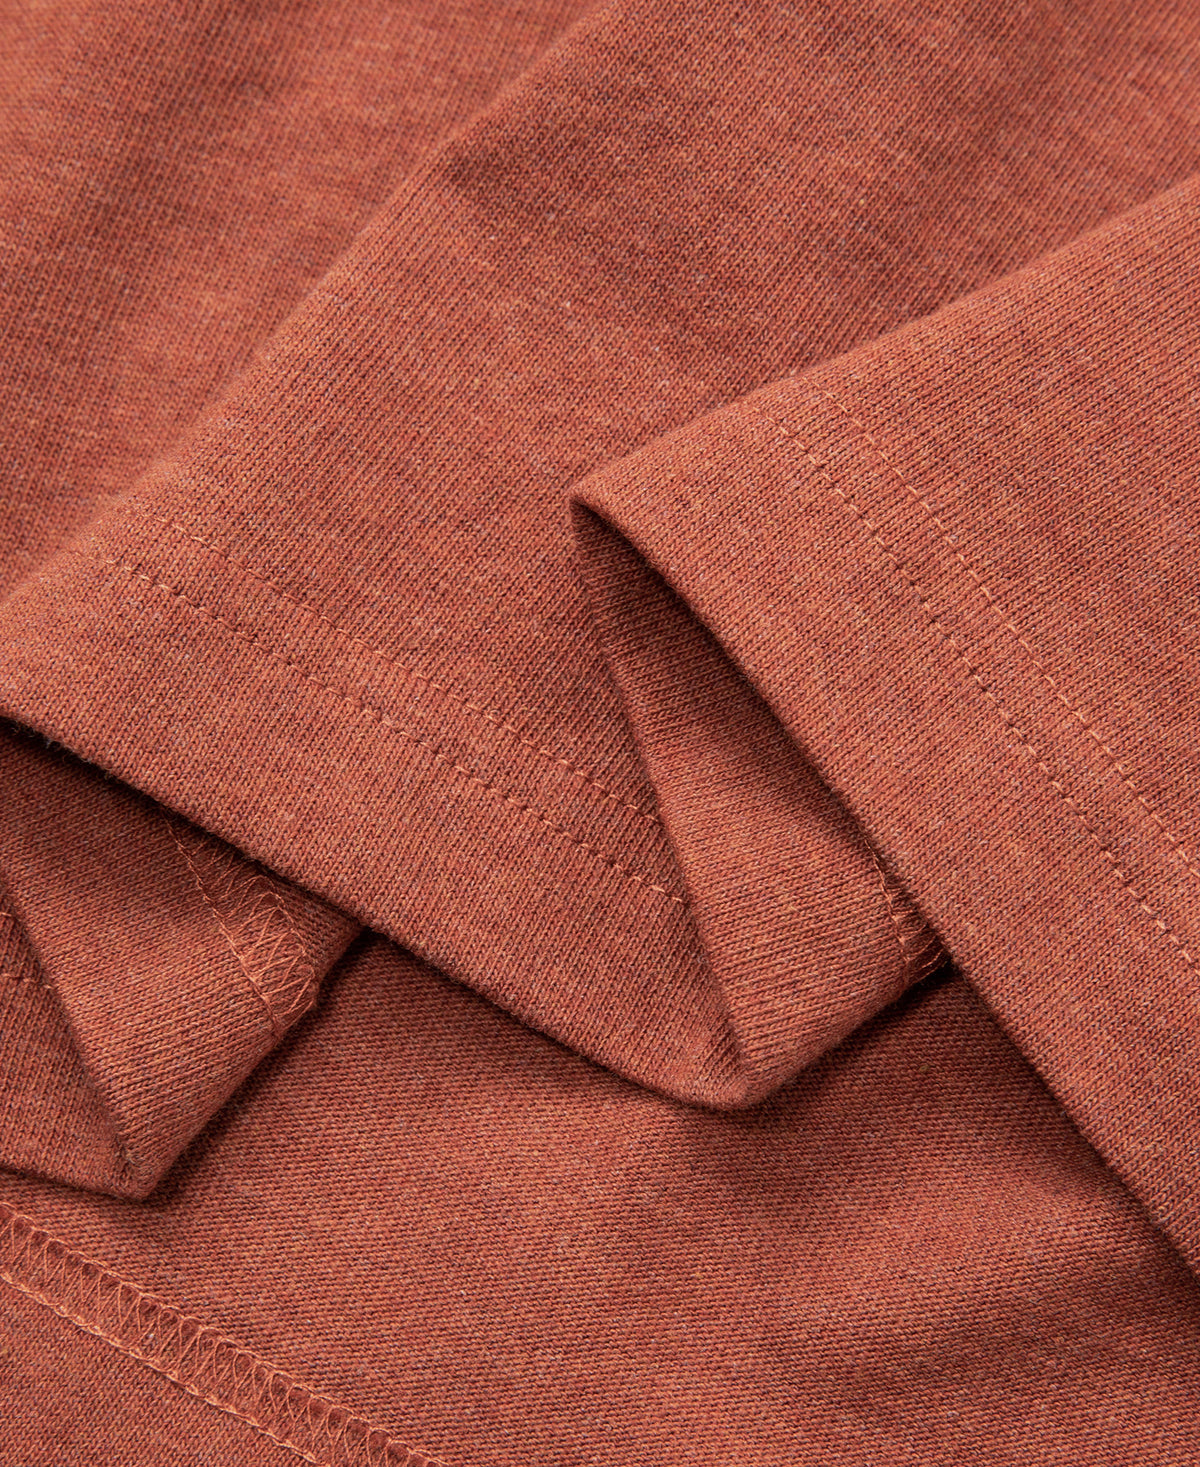 9 oz US Cotton Tubular T-Shirt - Orange Red